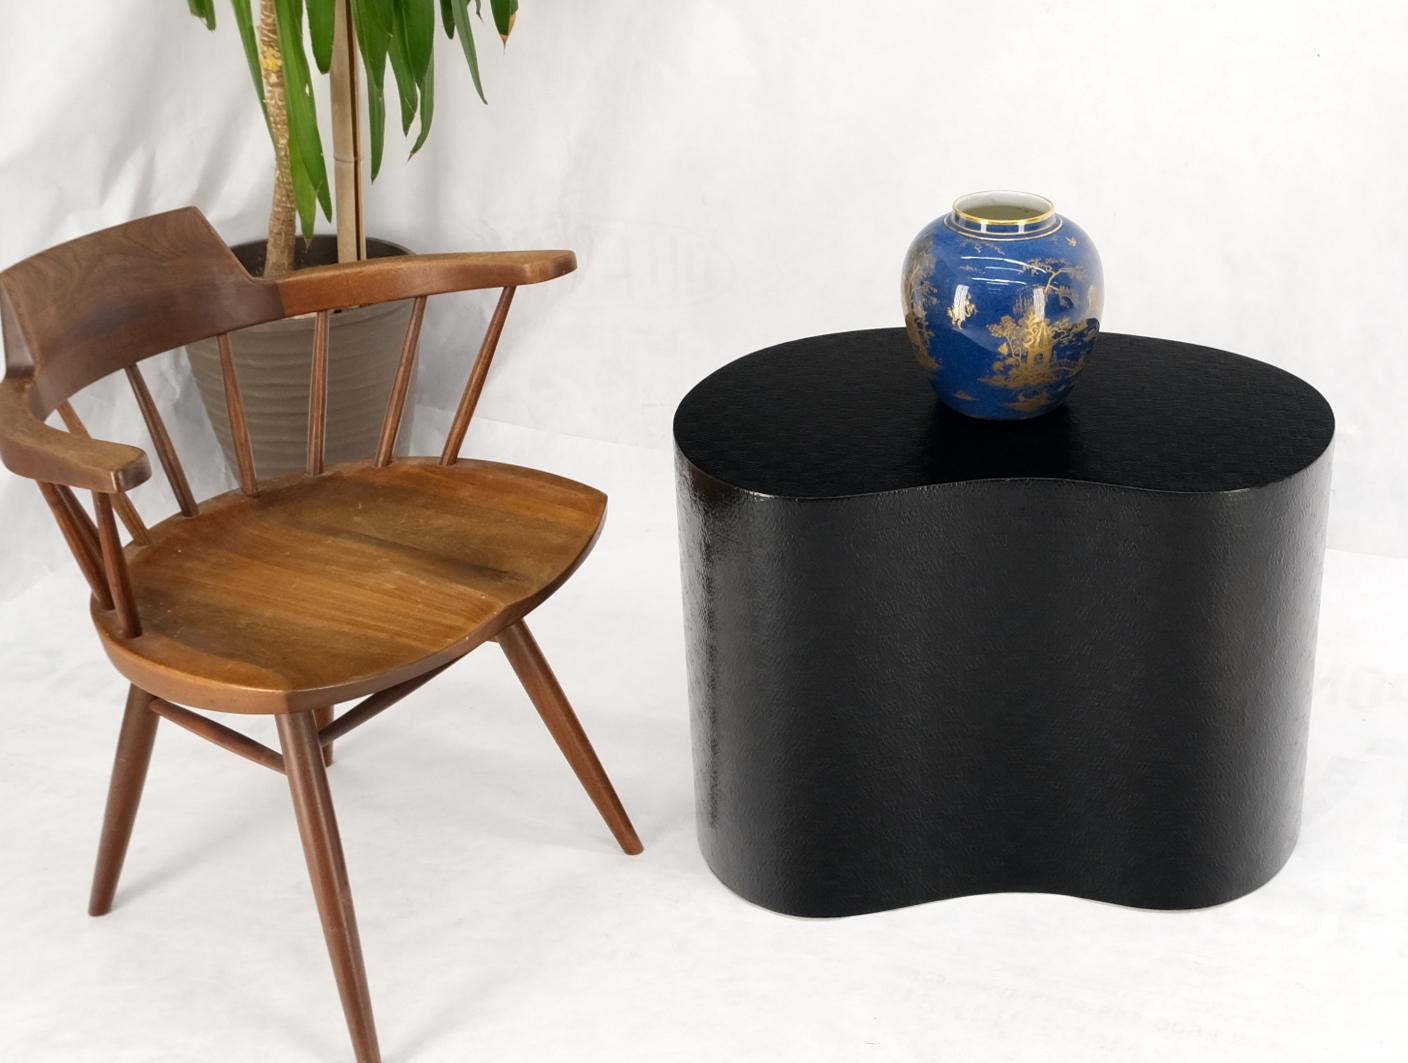 Kidneyshape black lacquer raffia cloth wrapped side end coffee table.
Custom design studio piece.